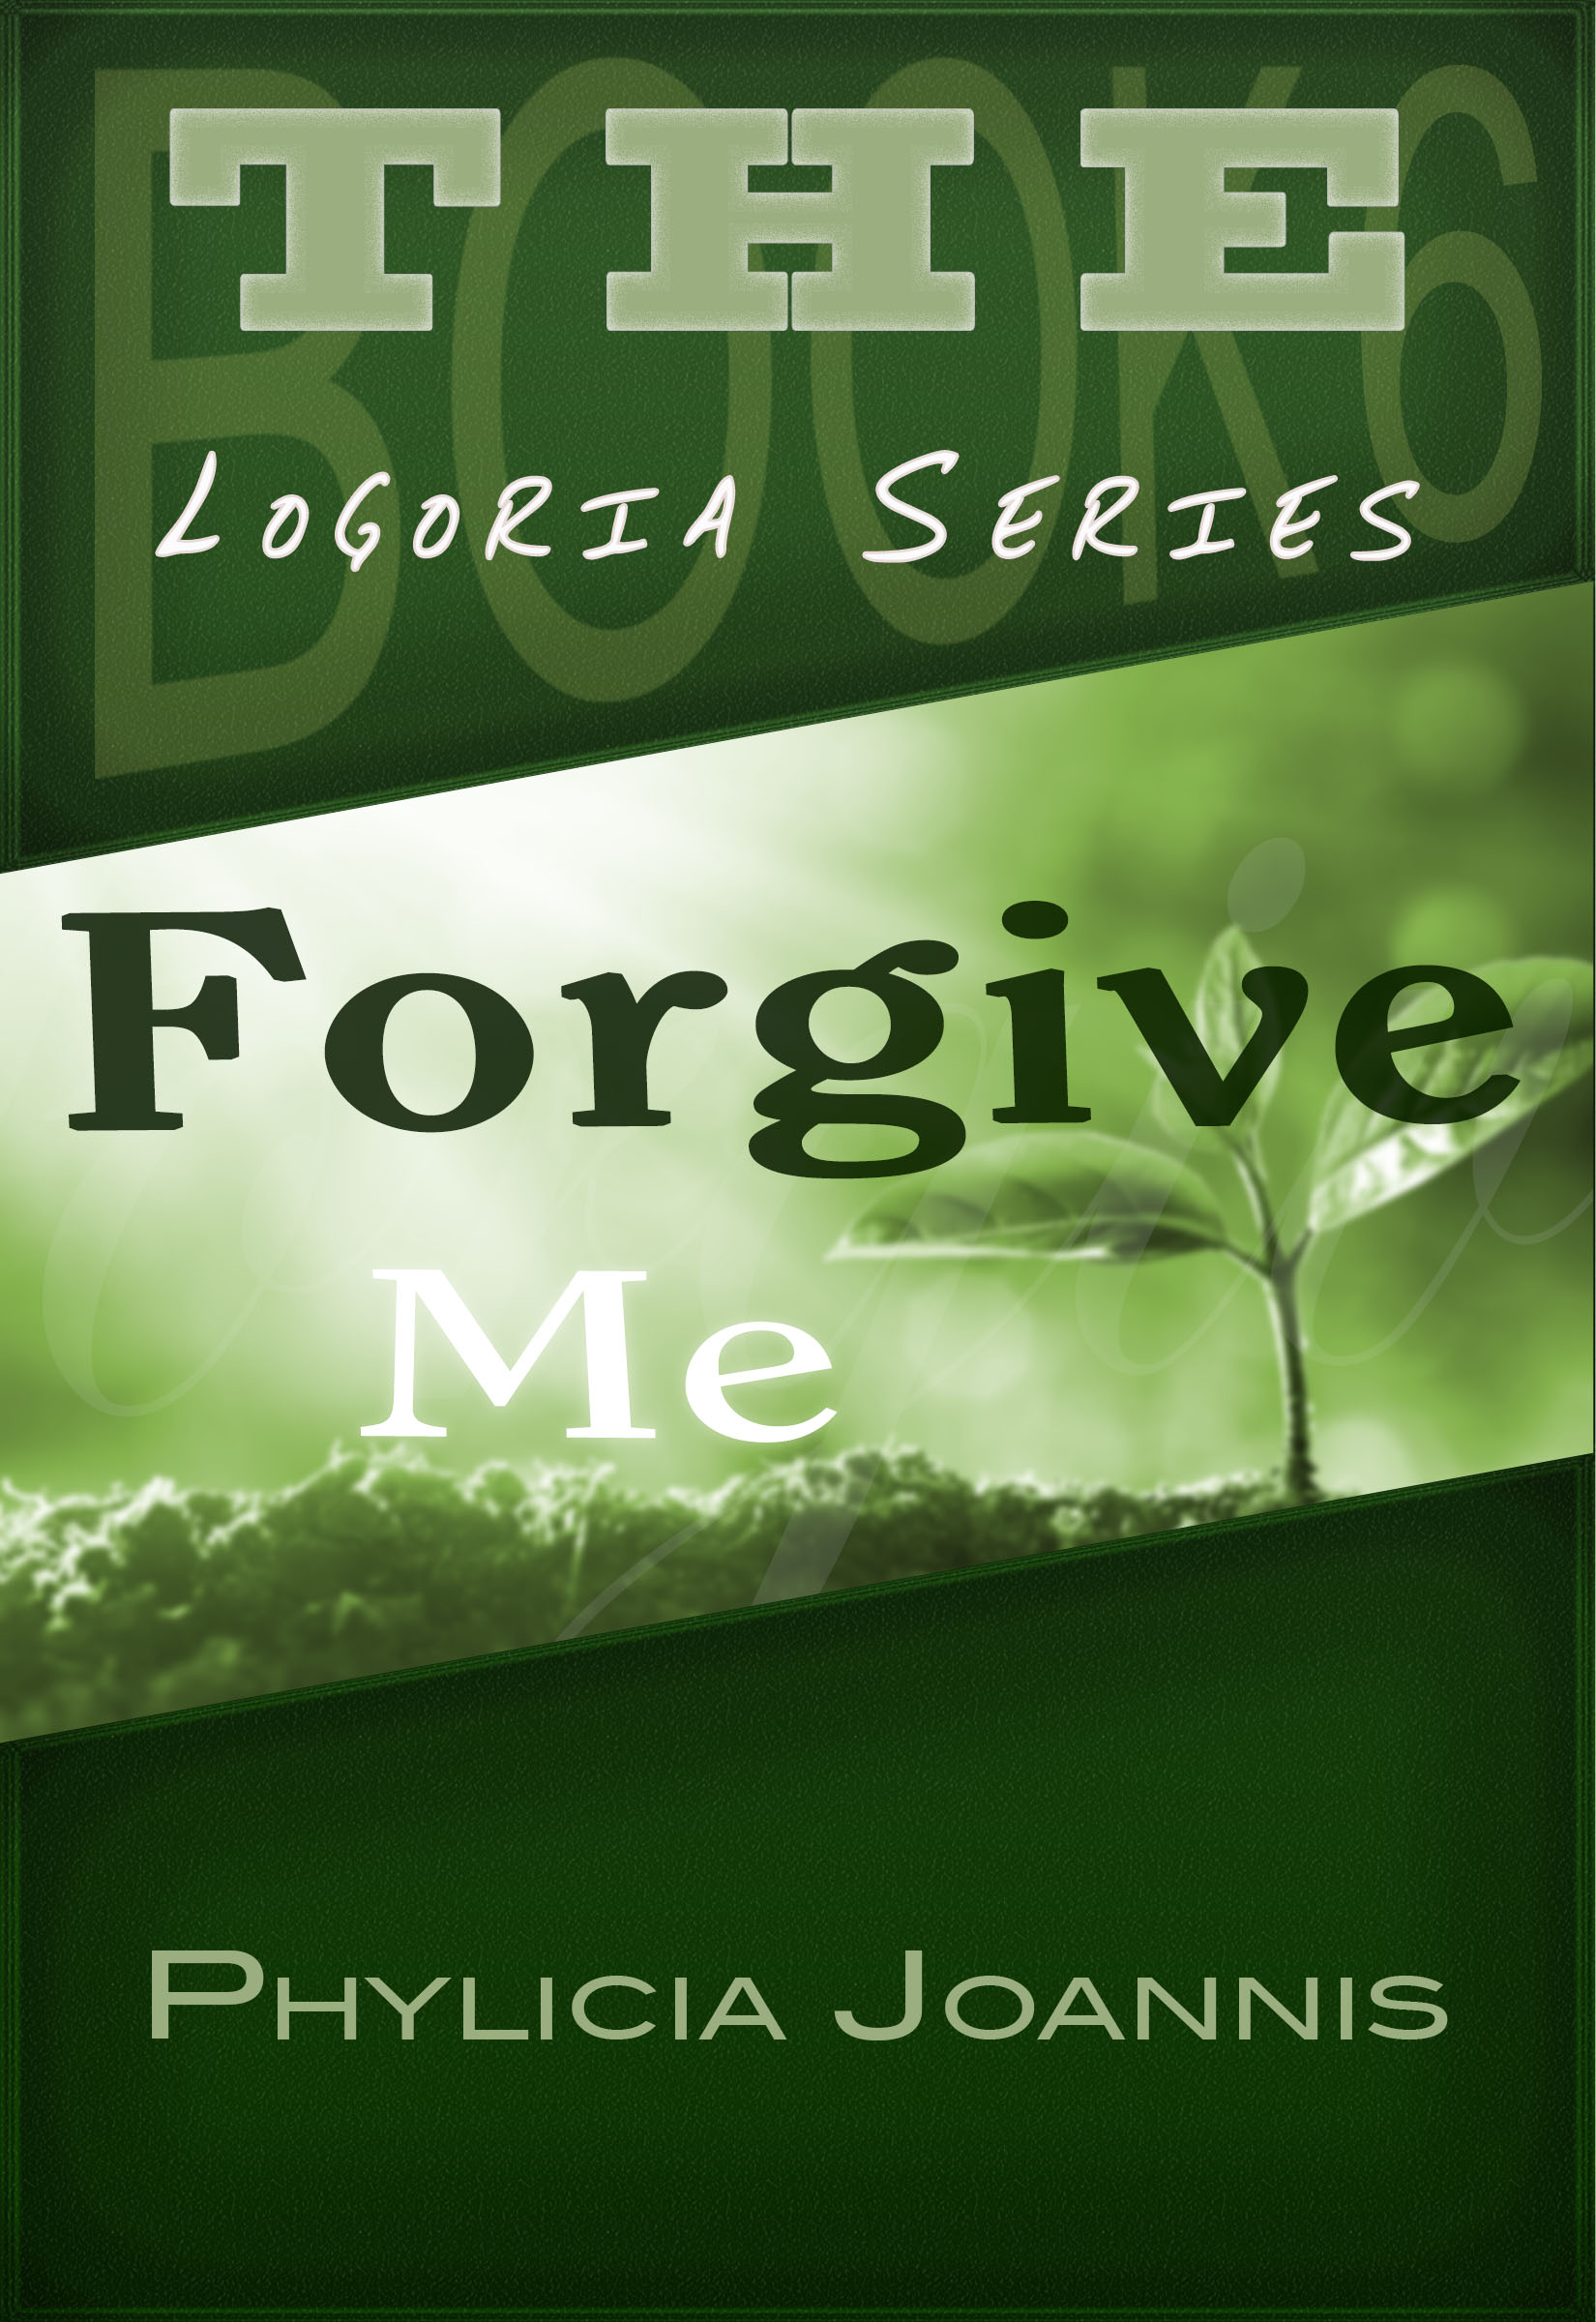 logoria series ebook book 6 forgive me